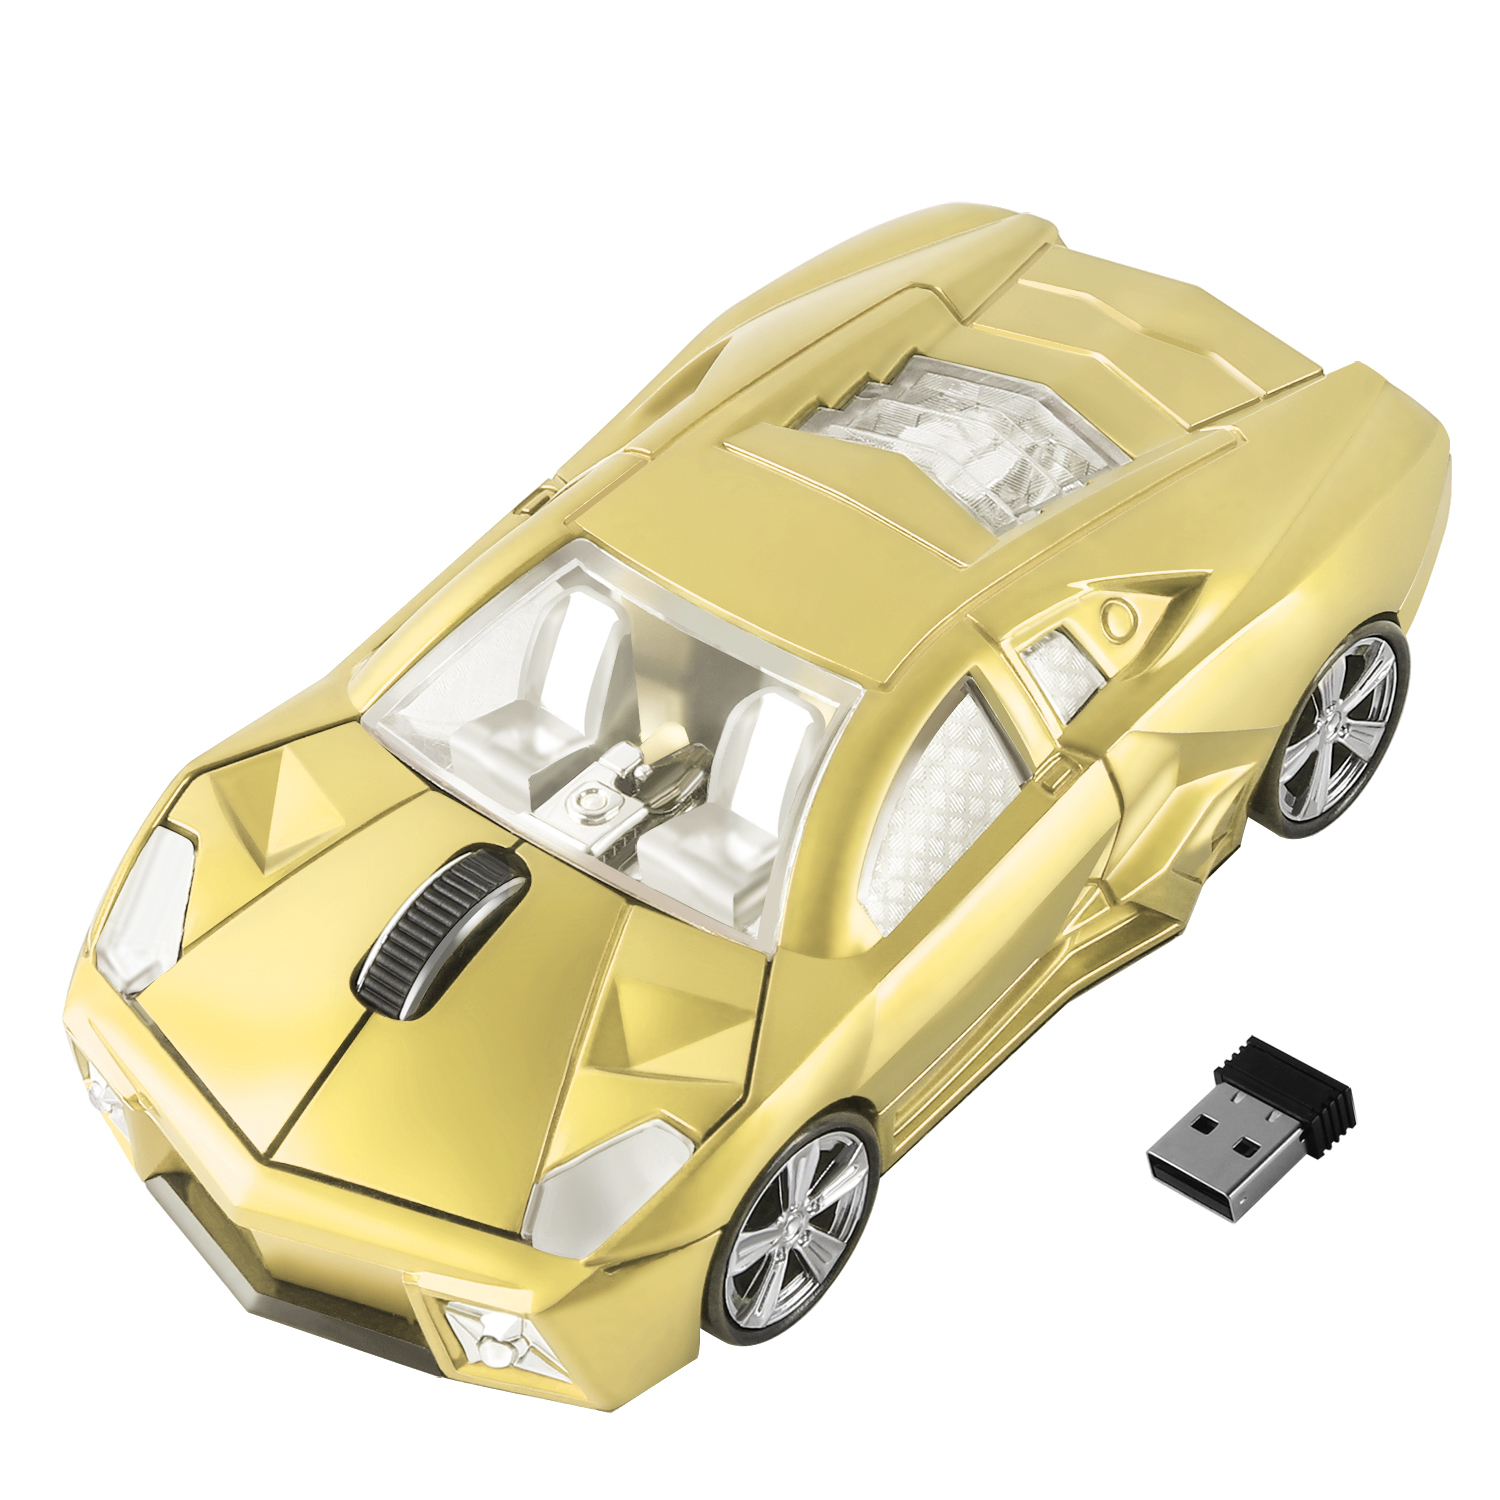 2-4G-Wireless-Mouse-Ergonomic-Sports-Car-Design-Gaming-Mause-1600-DPI-USB-Optical-Kids-Gift (8)